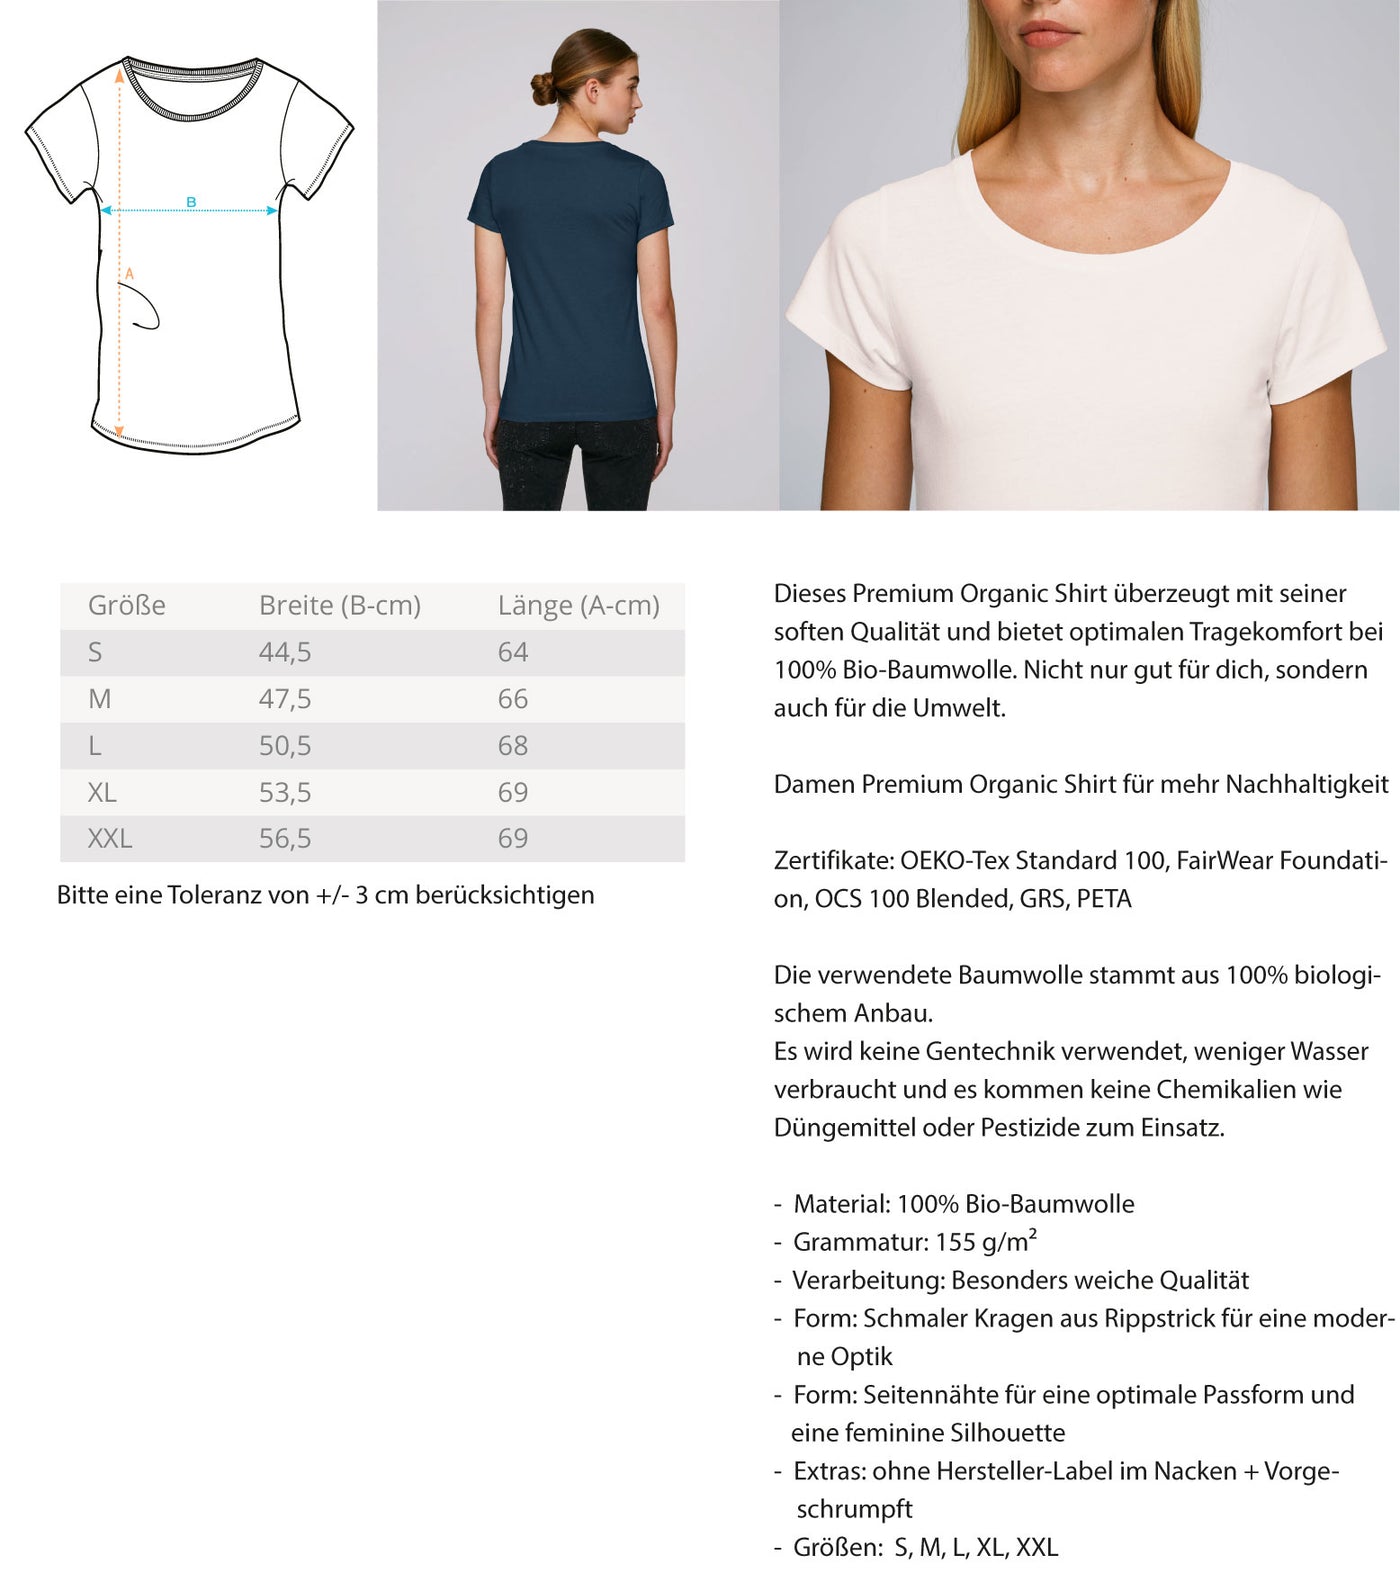 Wanderführer - Damen Premium Organic T-Shirt